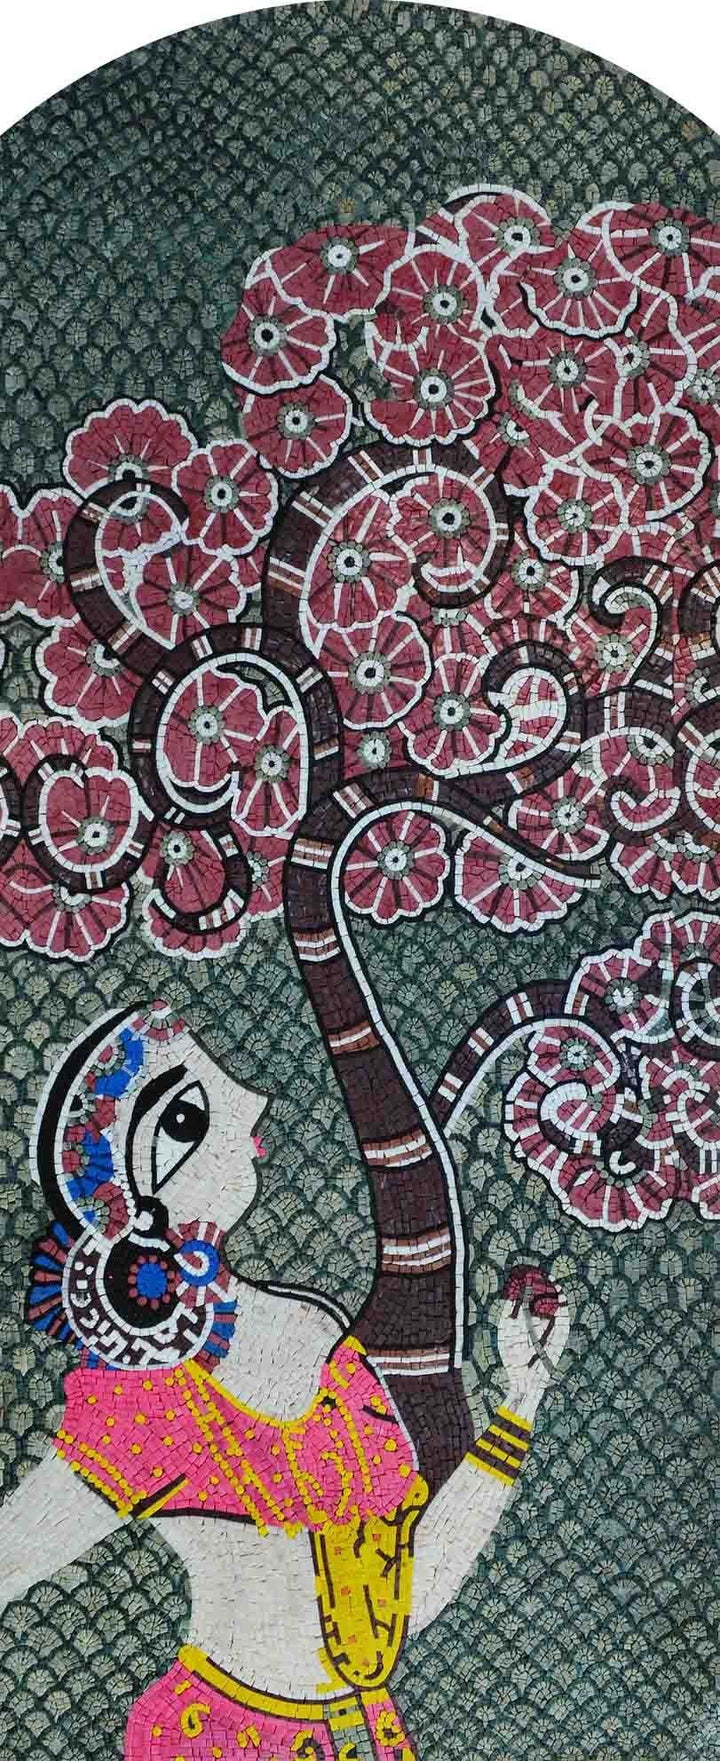 Bharti Dayal Tree Of Life" - Mosaic Art Reproduction"